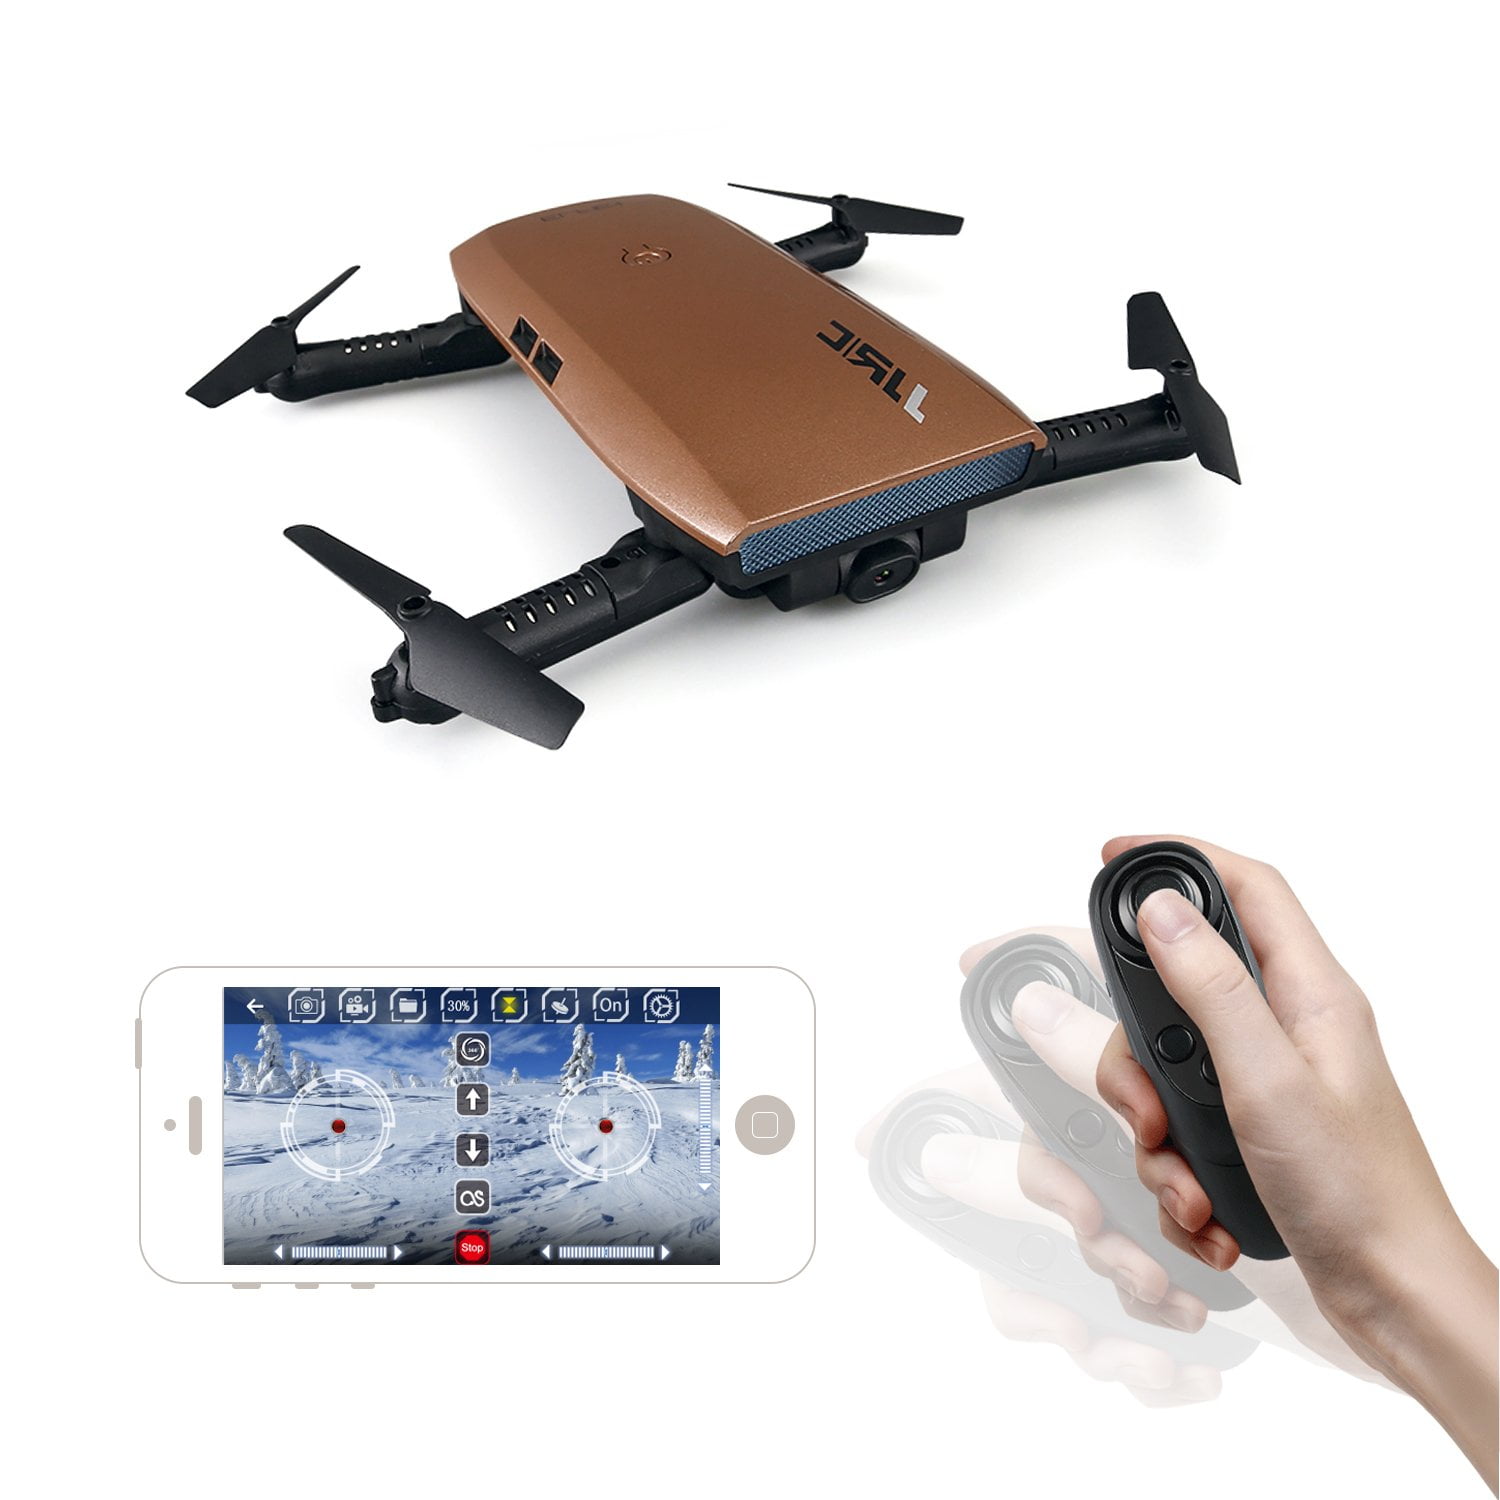 JJRC H47 Elfie Selfie 720P WiFi Camera Foldable Pocket Drone Mini FPV Quadcopter 